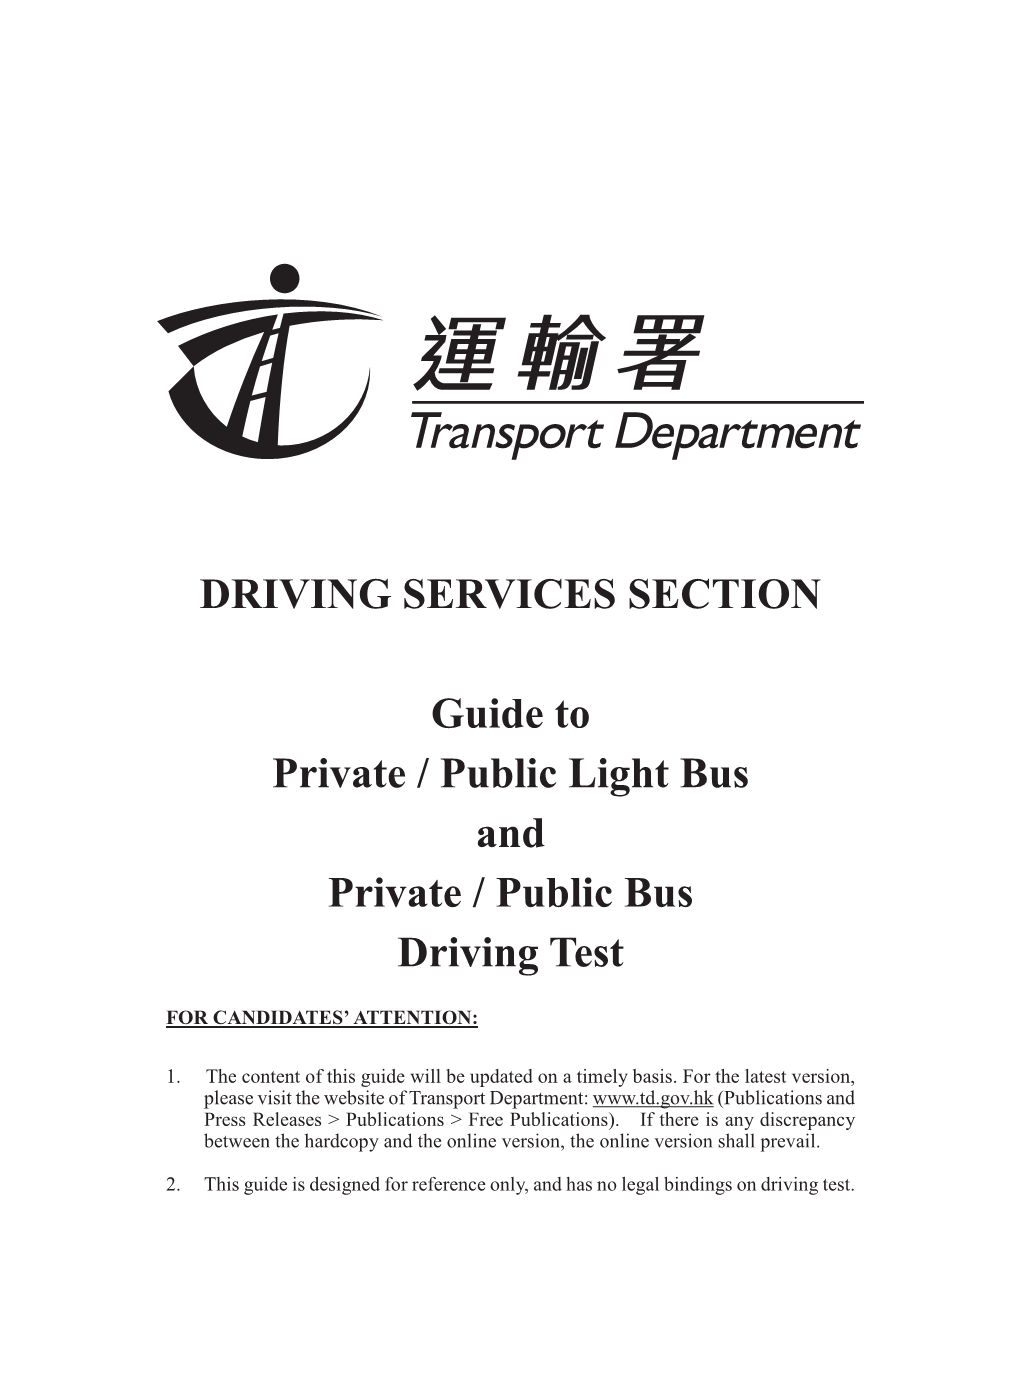 Public Light Bus and Private/Public Bus Driving Test